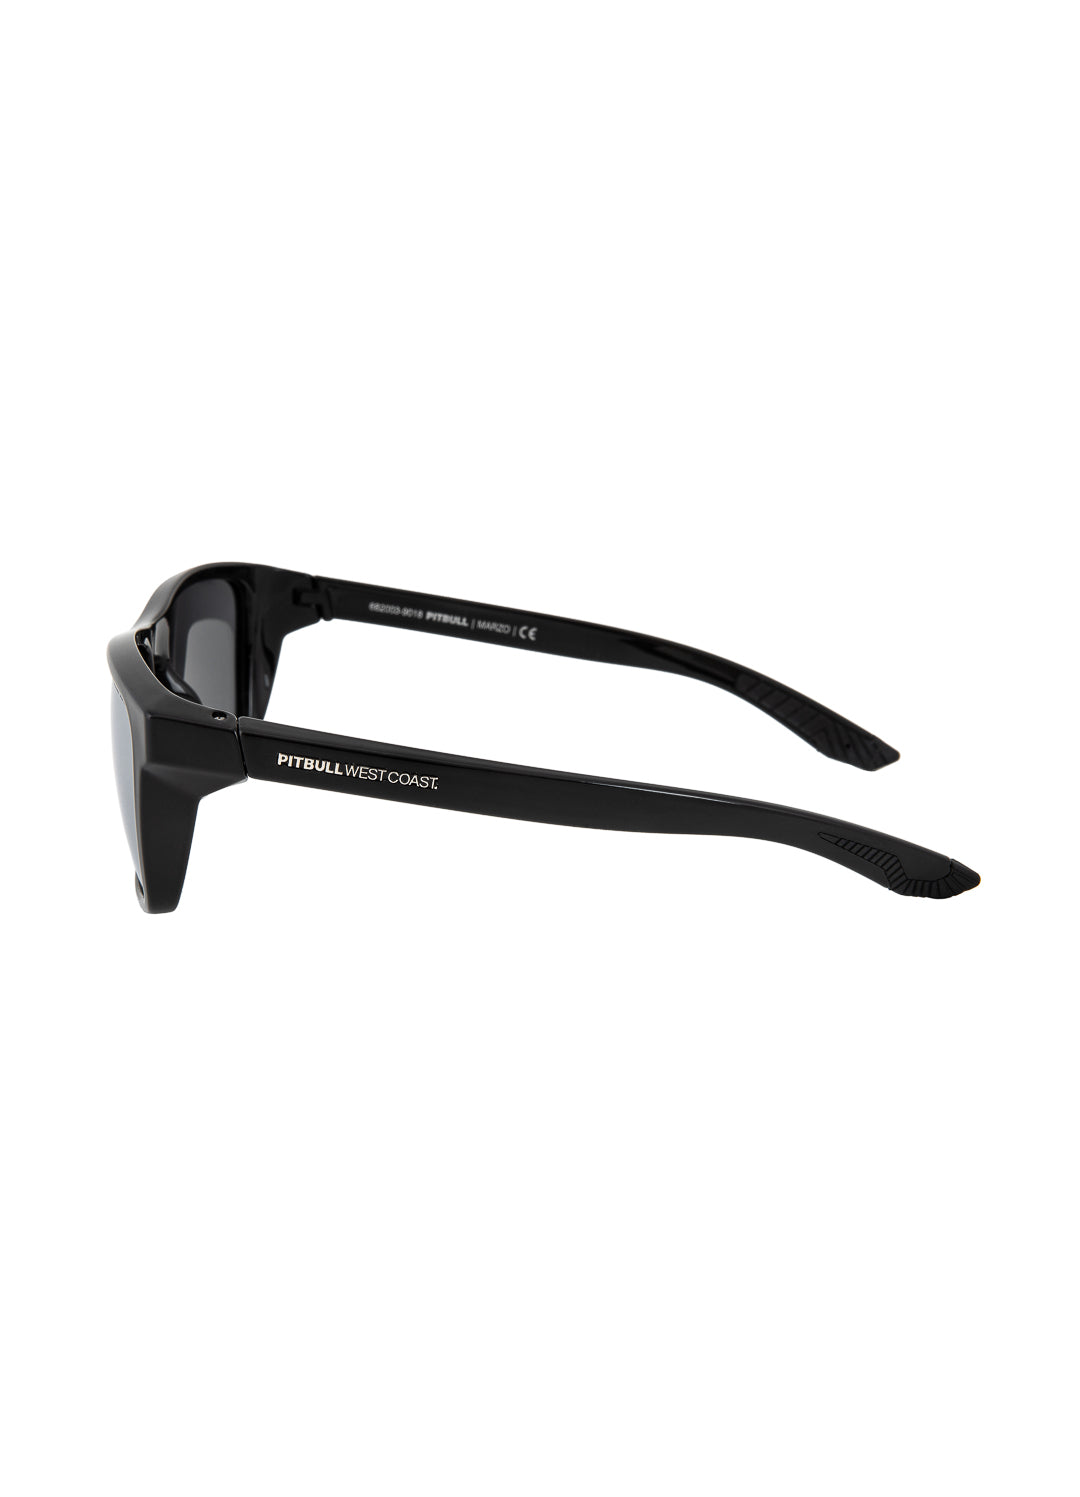 Sunglasses MARZO Black/Silver - Pitbull West Coast International Store 